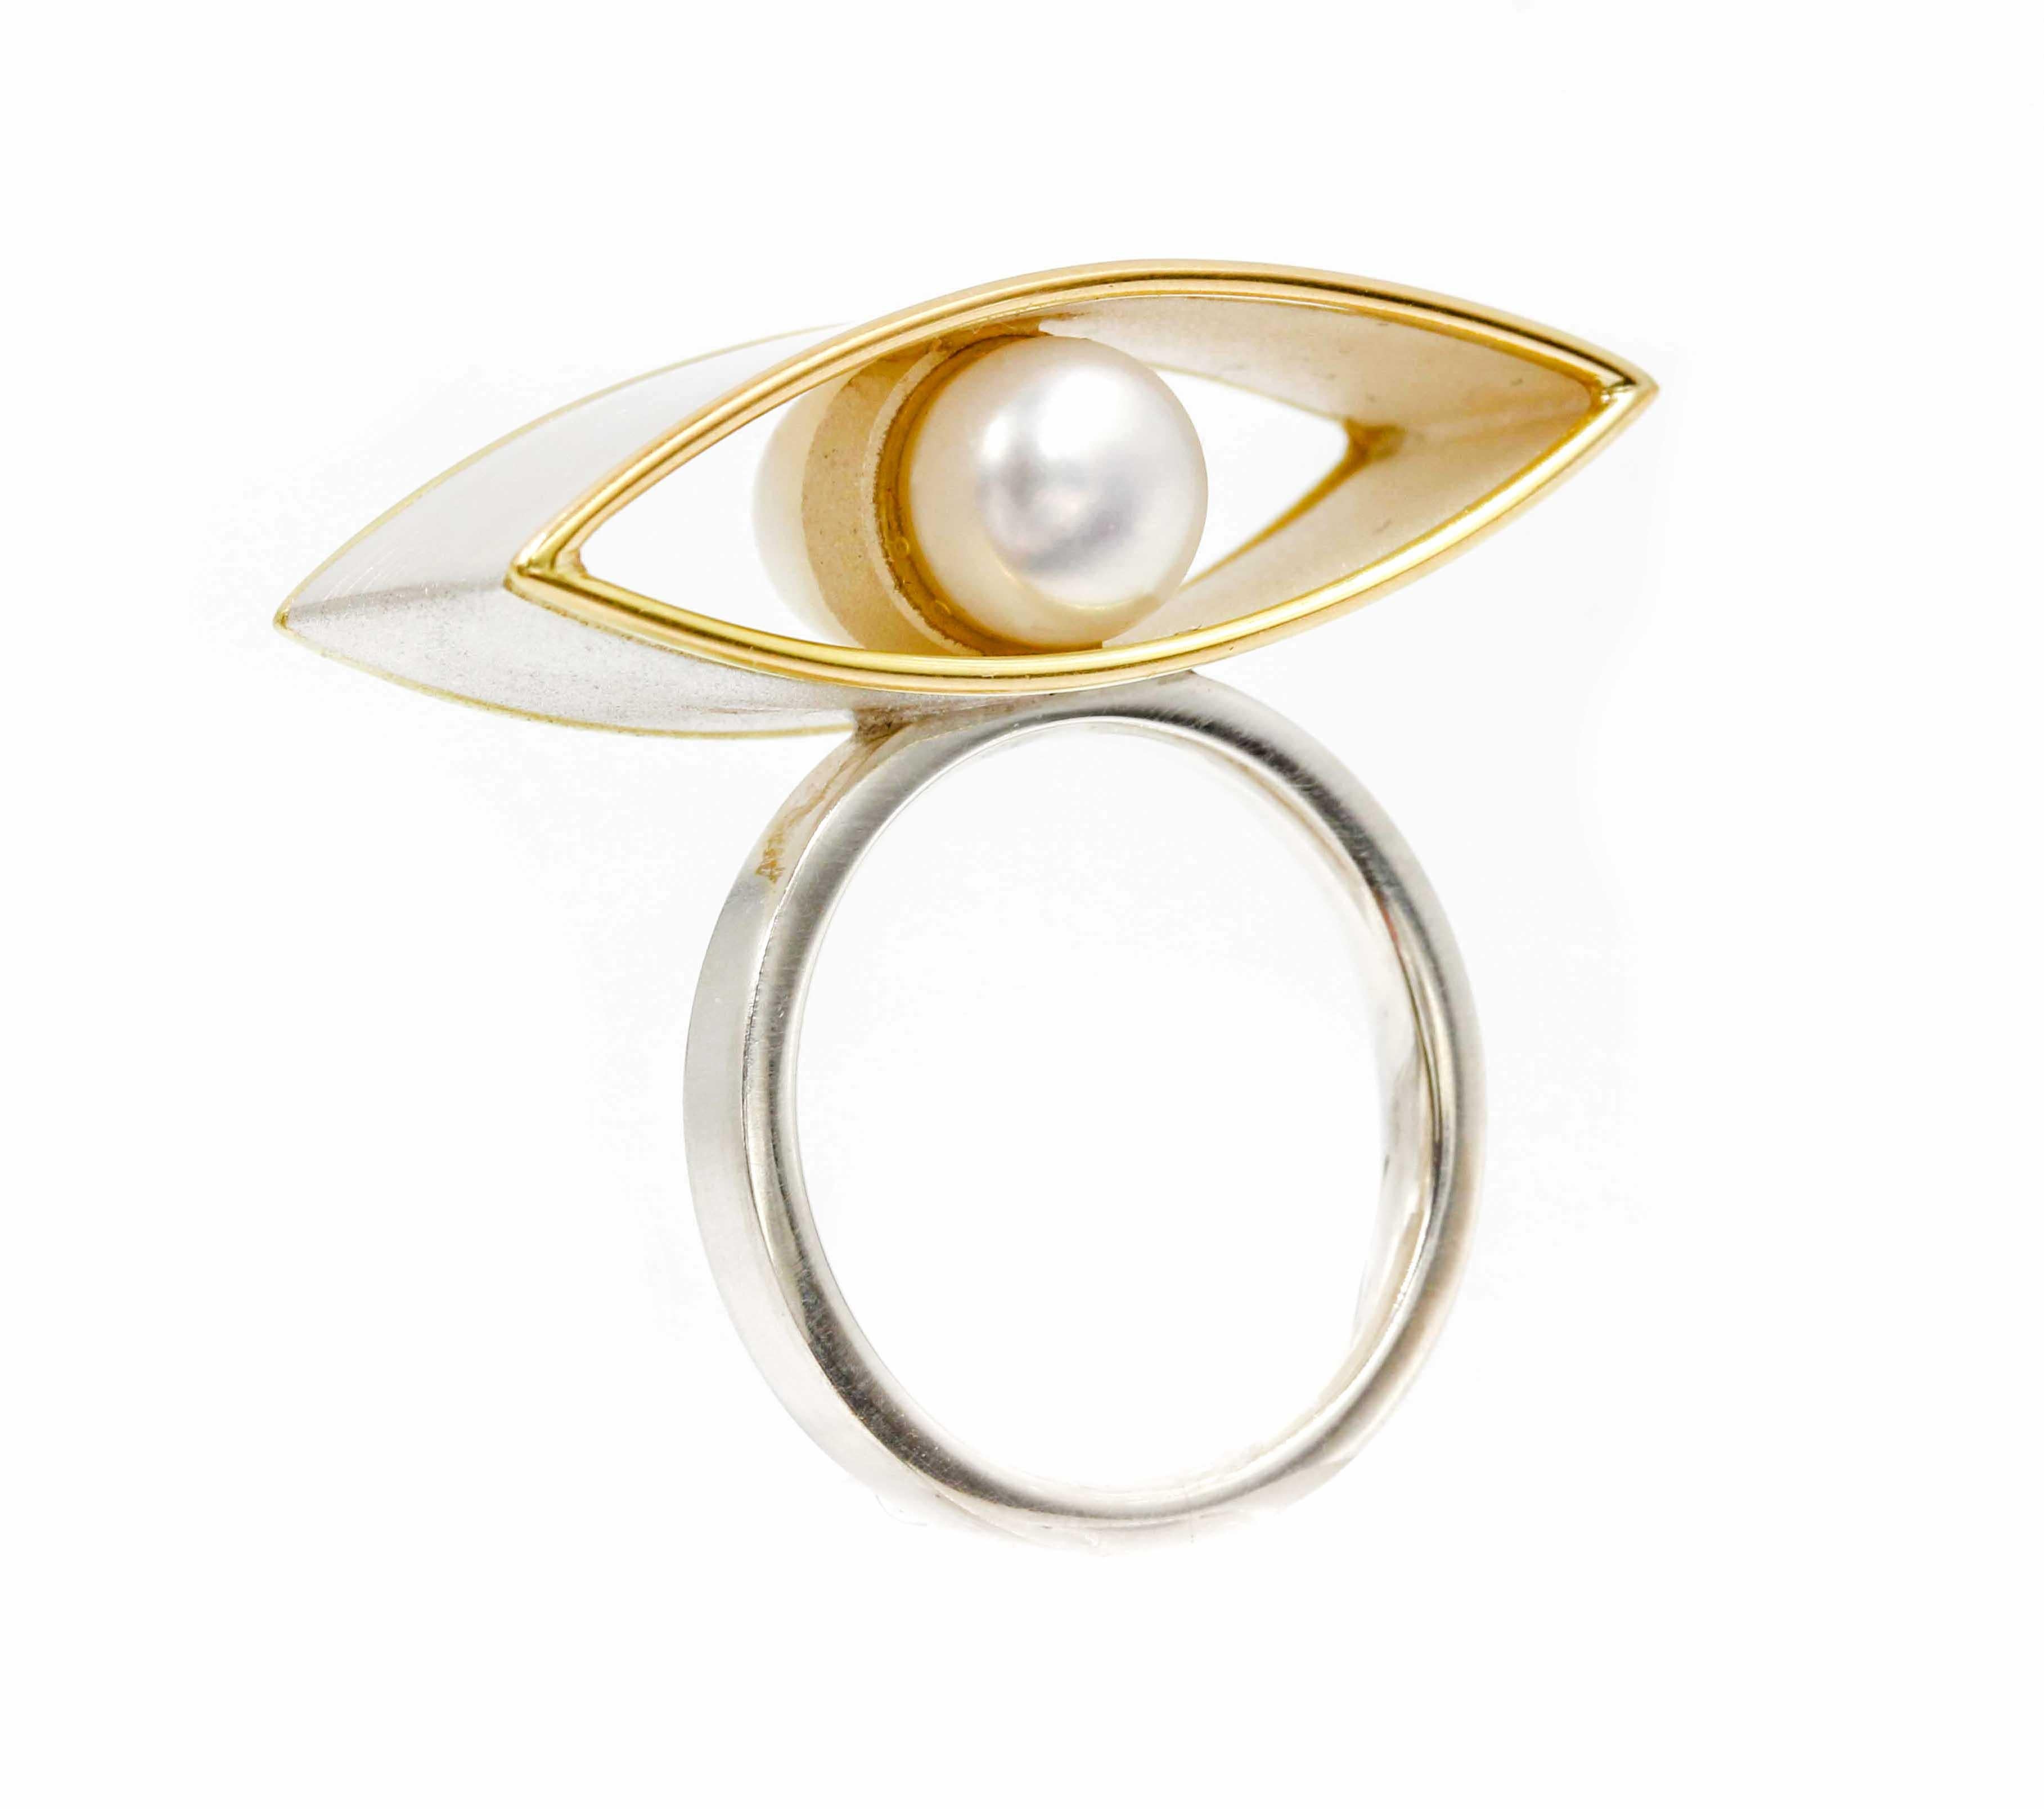 Janis Kerman, Sterling Silver Gold Pearl Ring, sterling silver, 18 karat gold, cultured pearl

